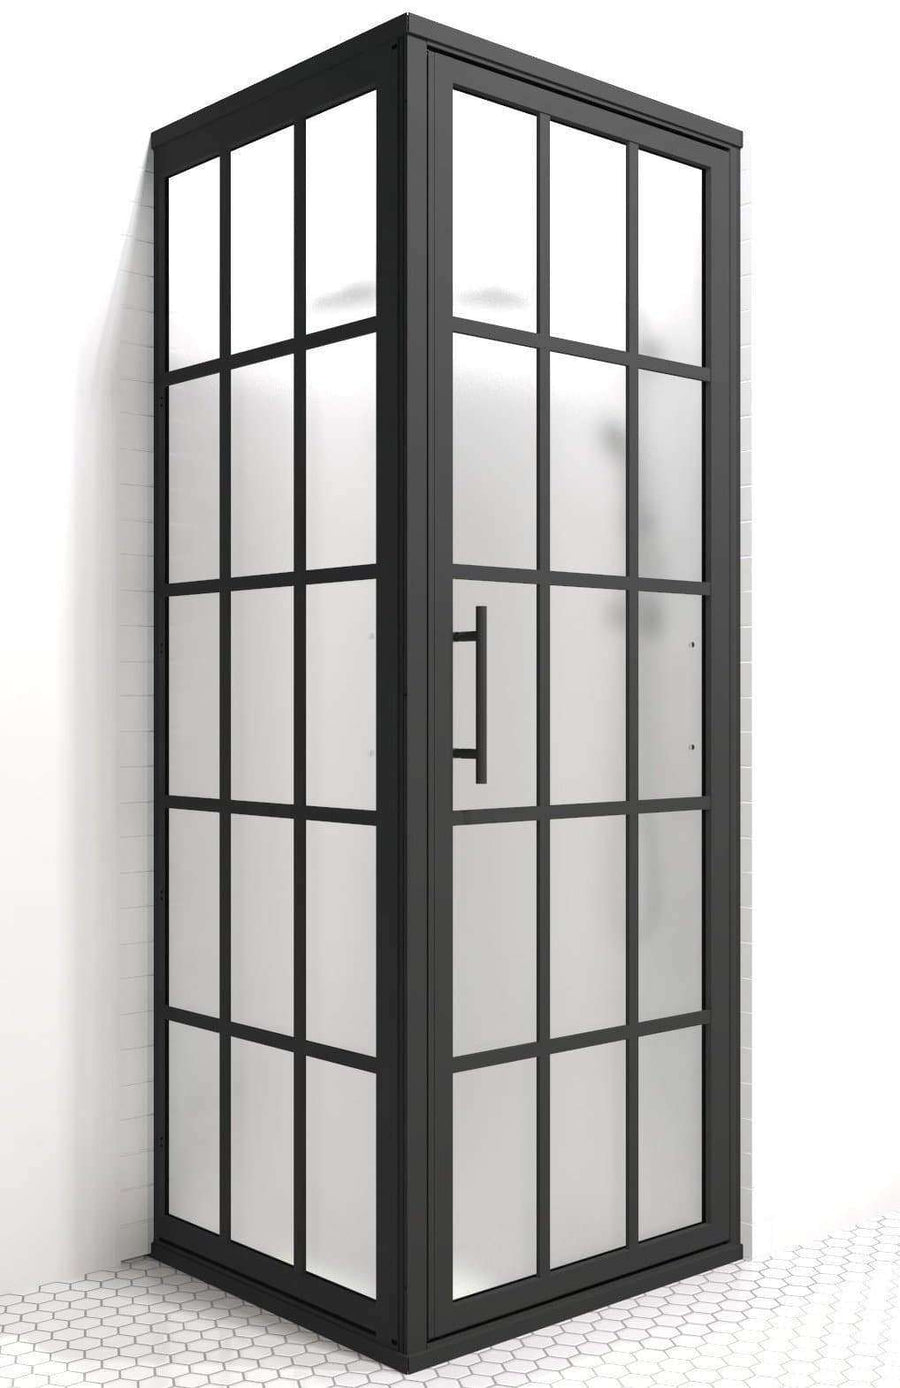 Gridscape Industral Black Grid GS1 Series 1 Corner Shower Door with SatinDeco Glass by Coastal Shower Doors